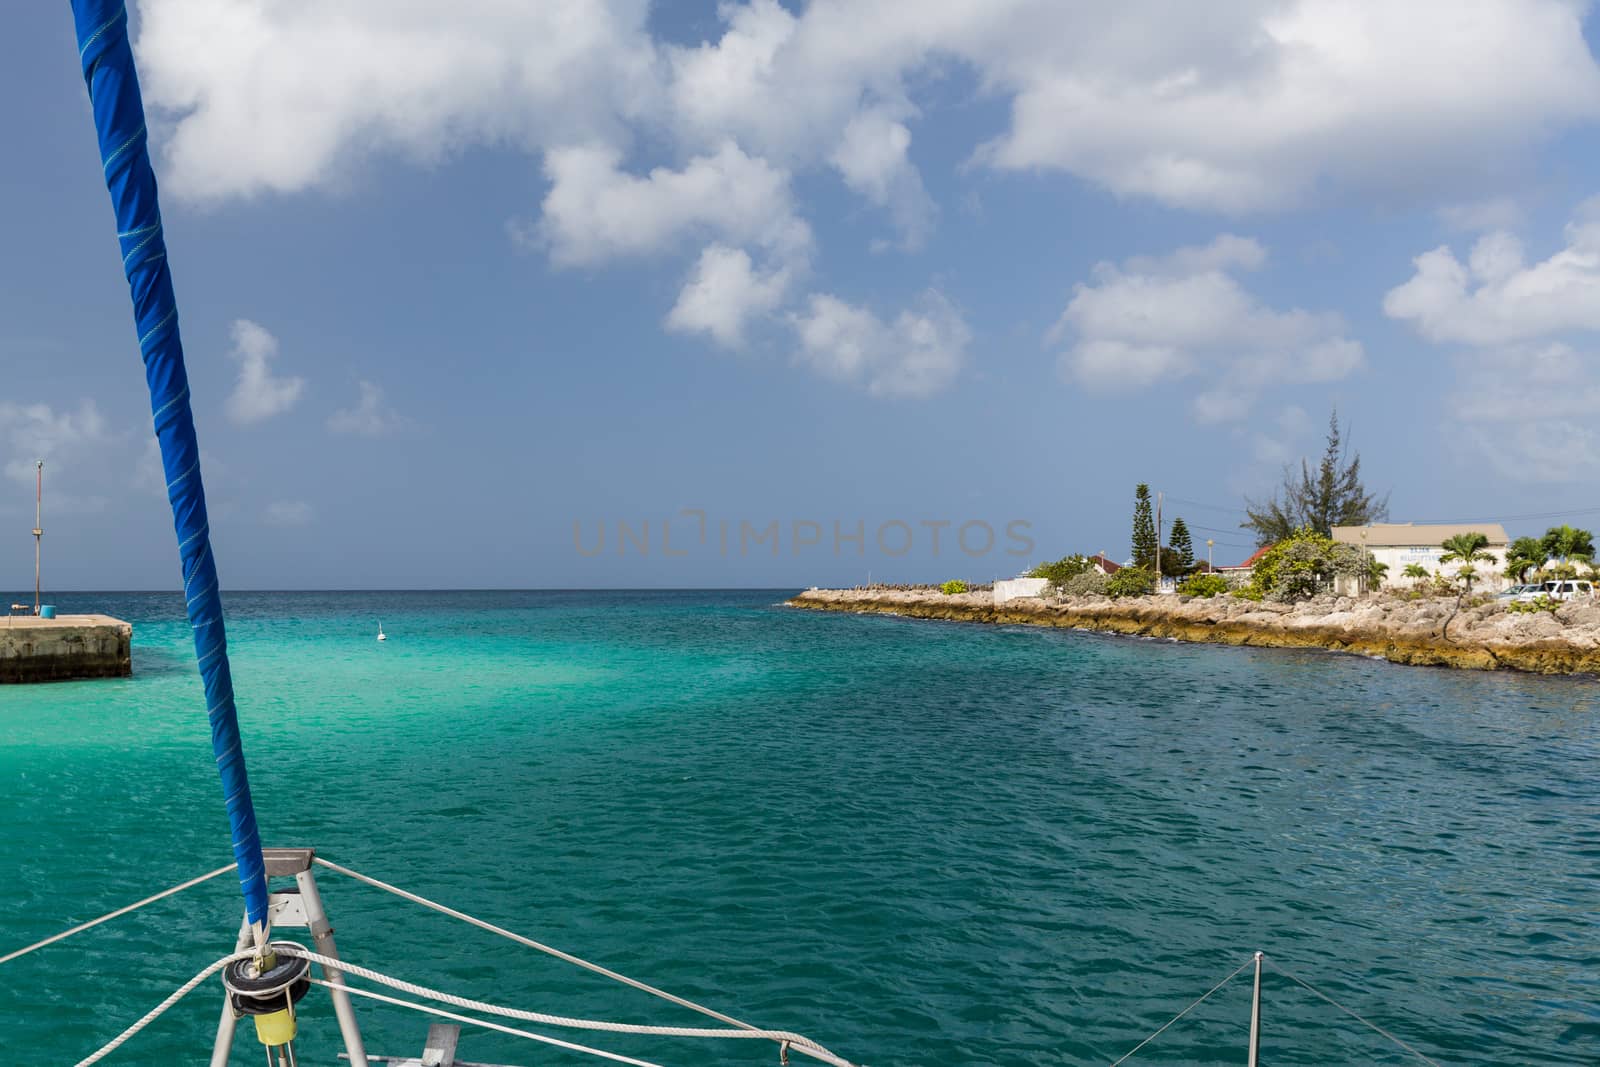 Catamaran cruising at sea in Barbados by chrisukphoto